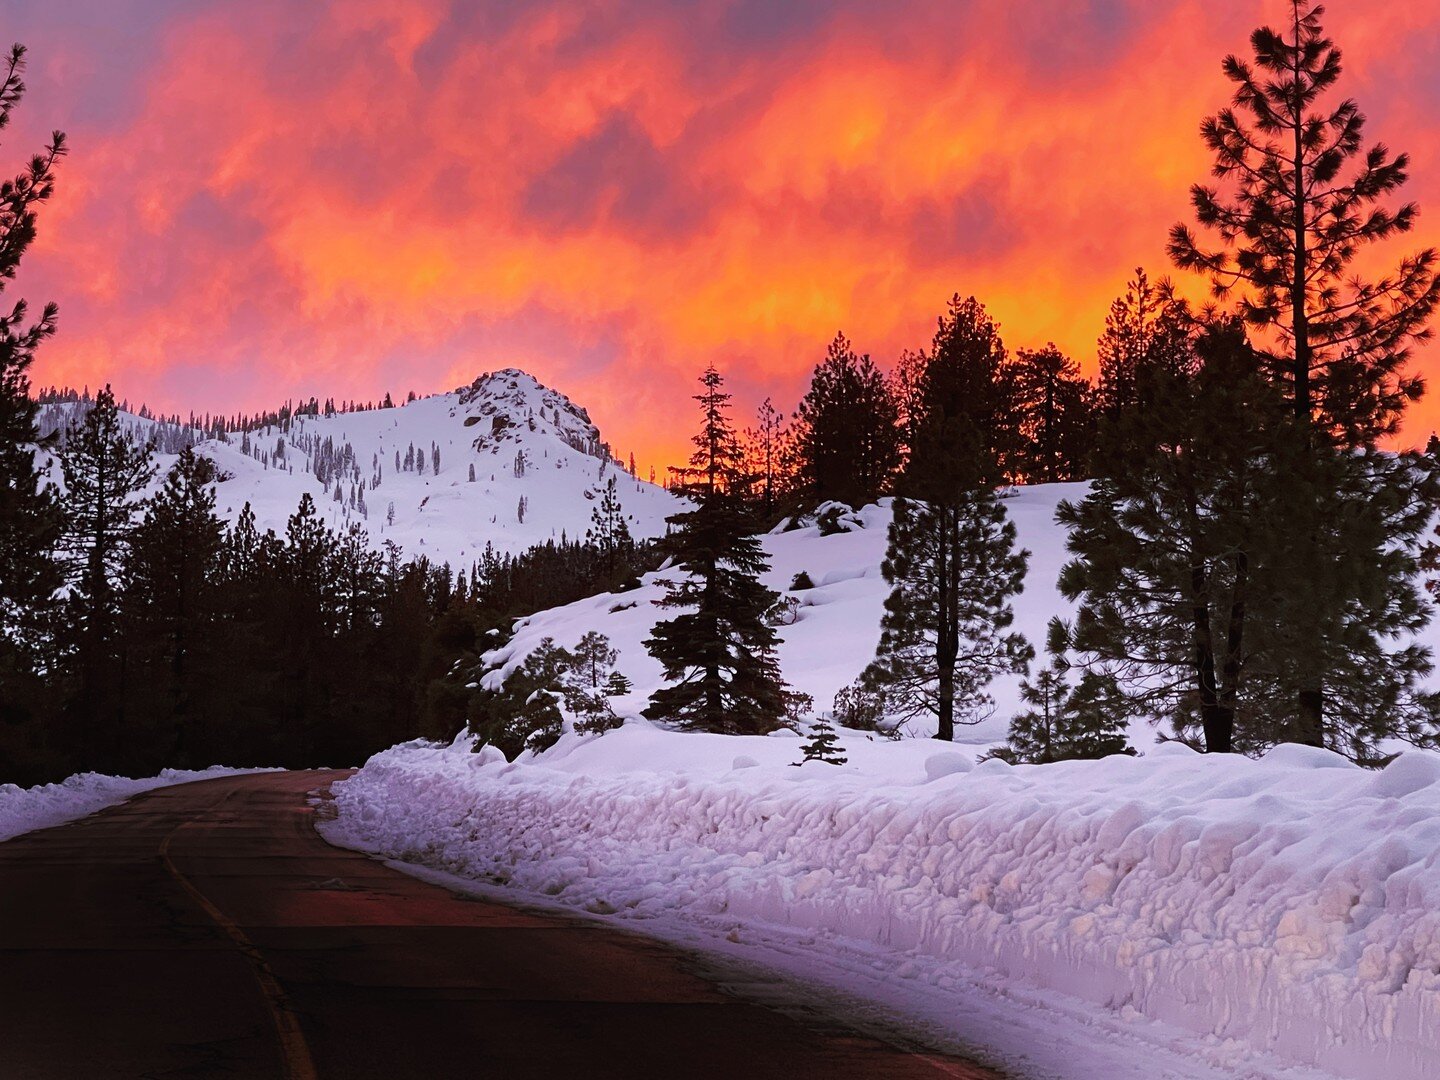 Sunset between the snow storms...
....Eureka Peak you are always sharing the magic. 

#magicmountain #eurekapeak #plumascounty #johnsvillehistoricskibowl #plumaseurekastatepark #sunset #sunsetphotography #mountains #snowphotography #snow #landscapeph